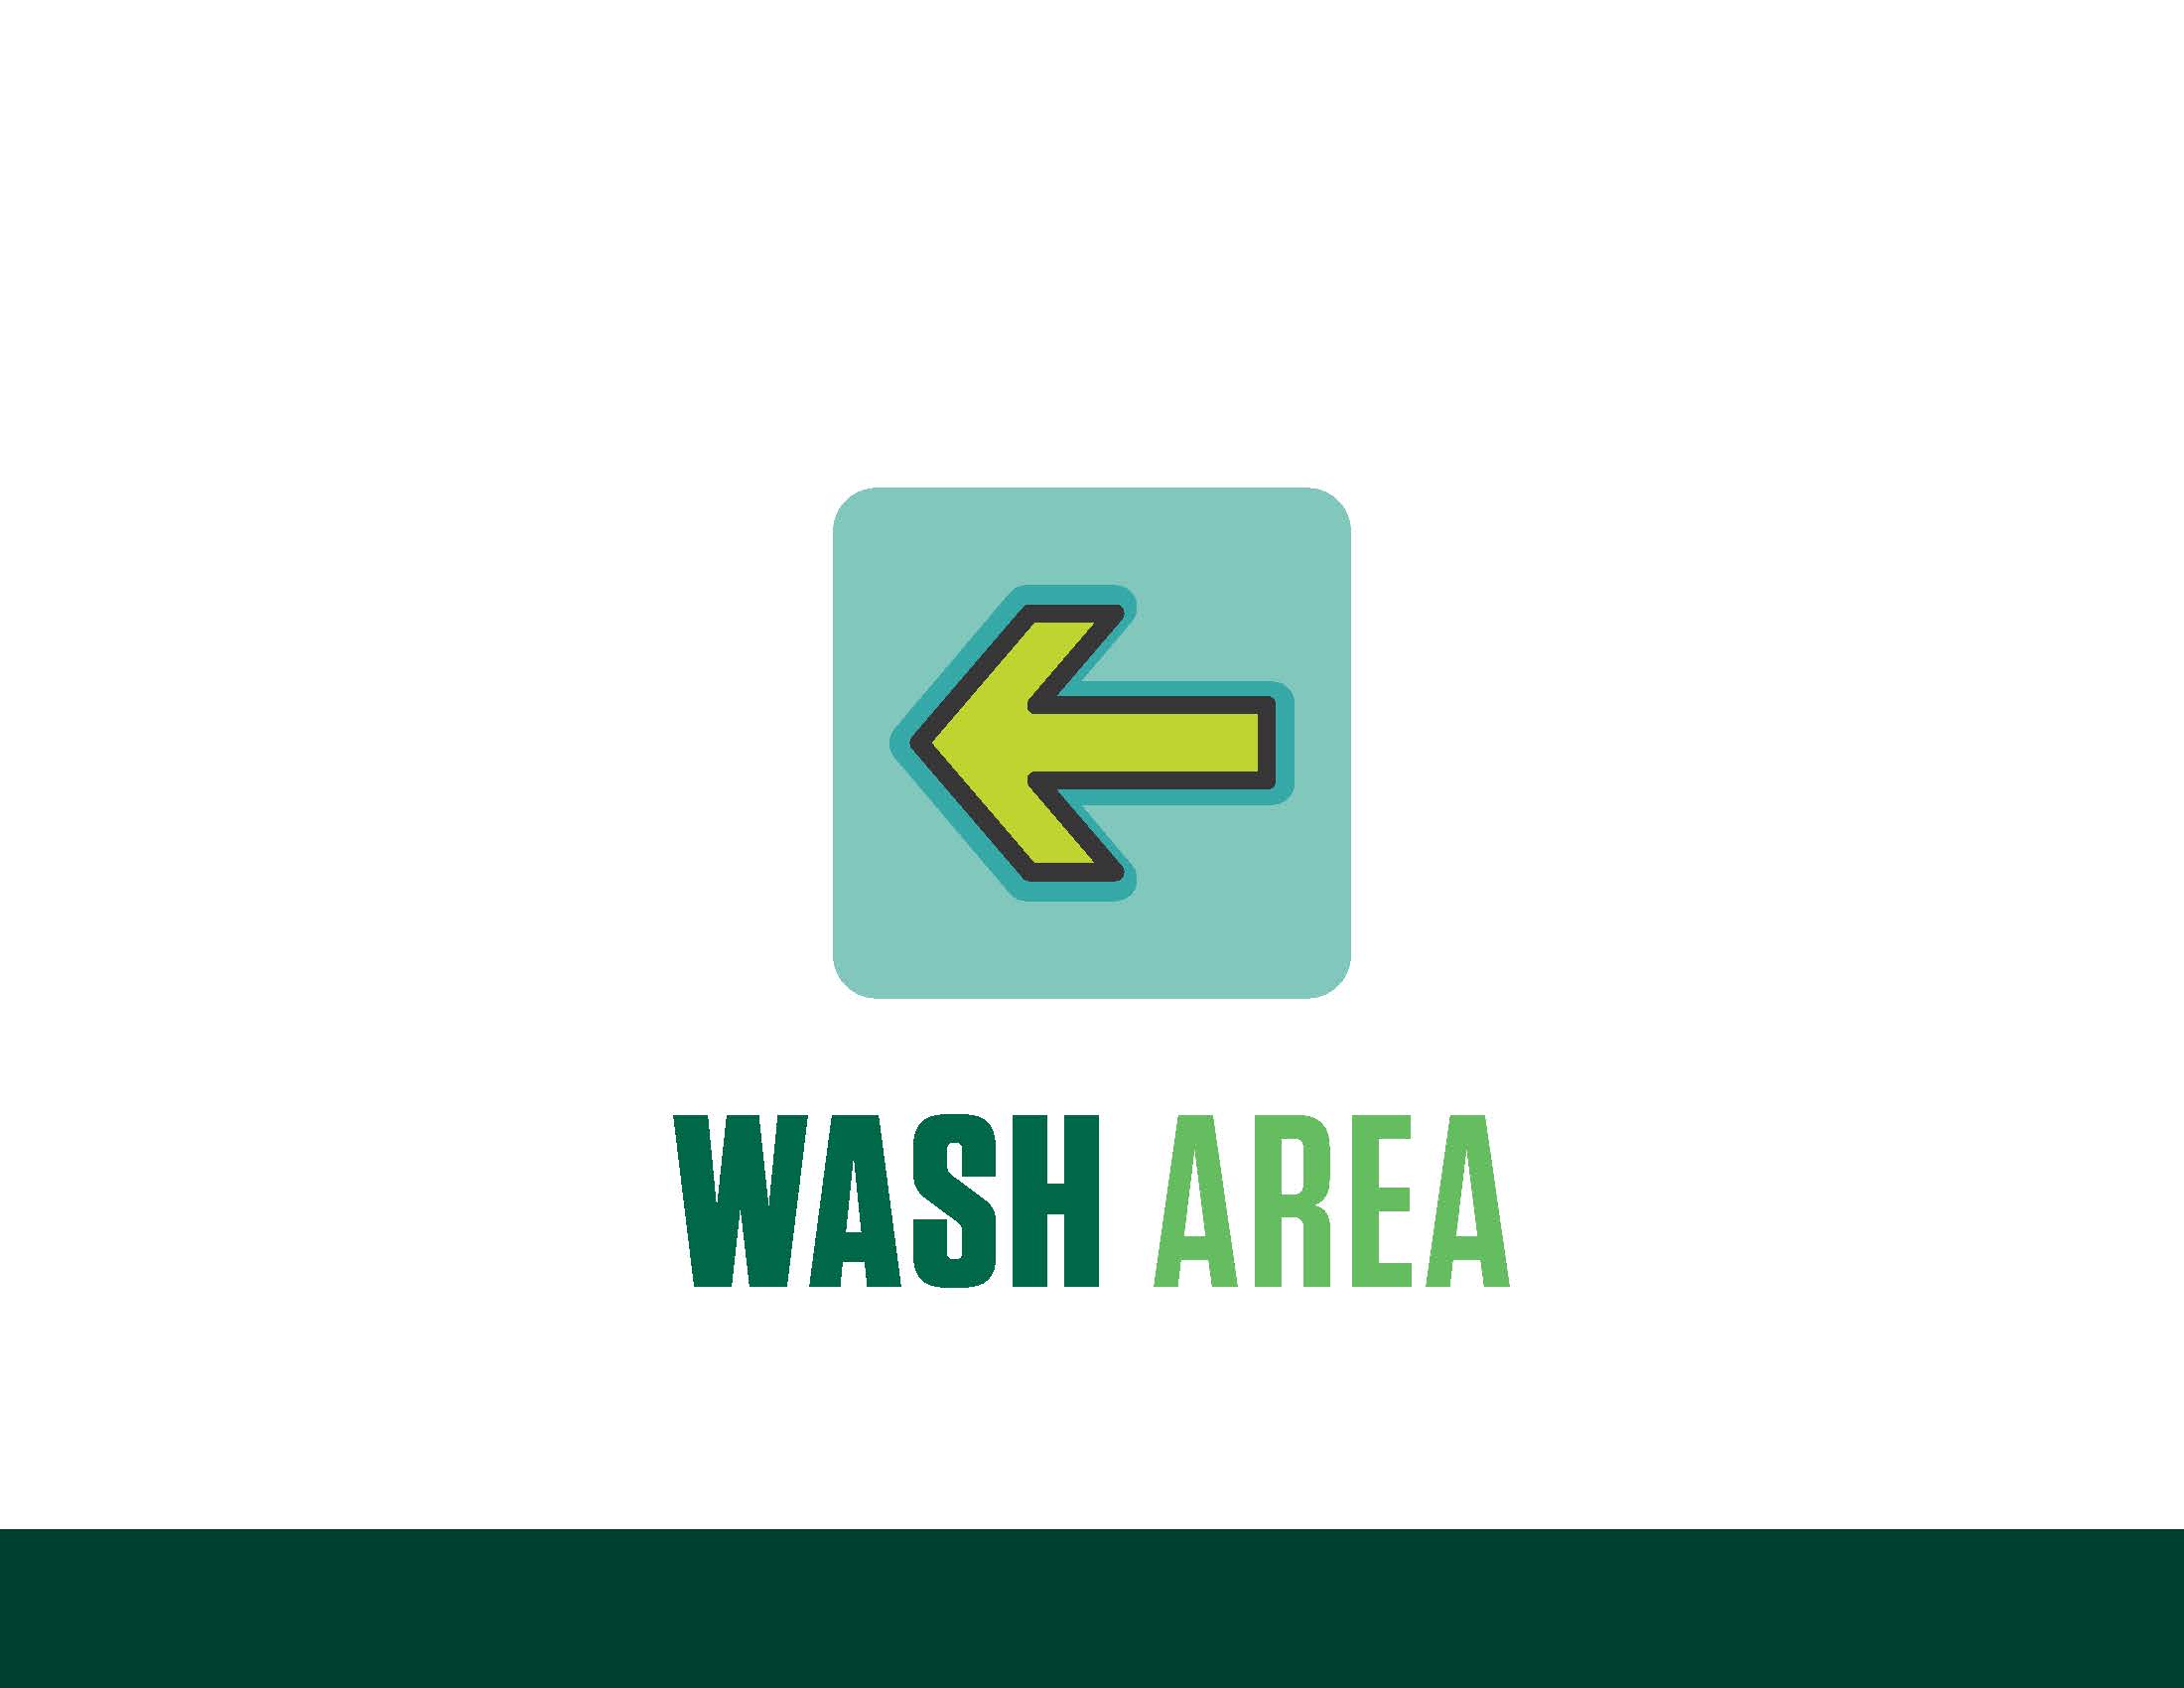 COVID sign - wash area, left arrow